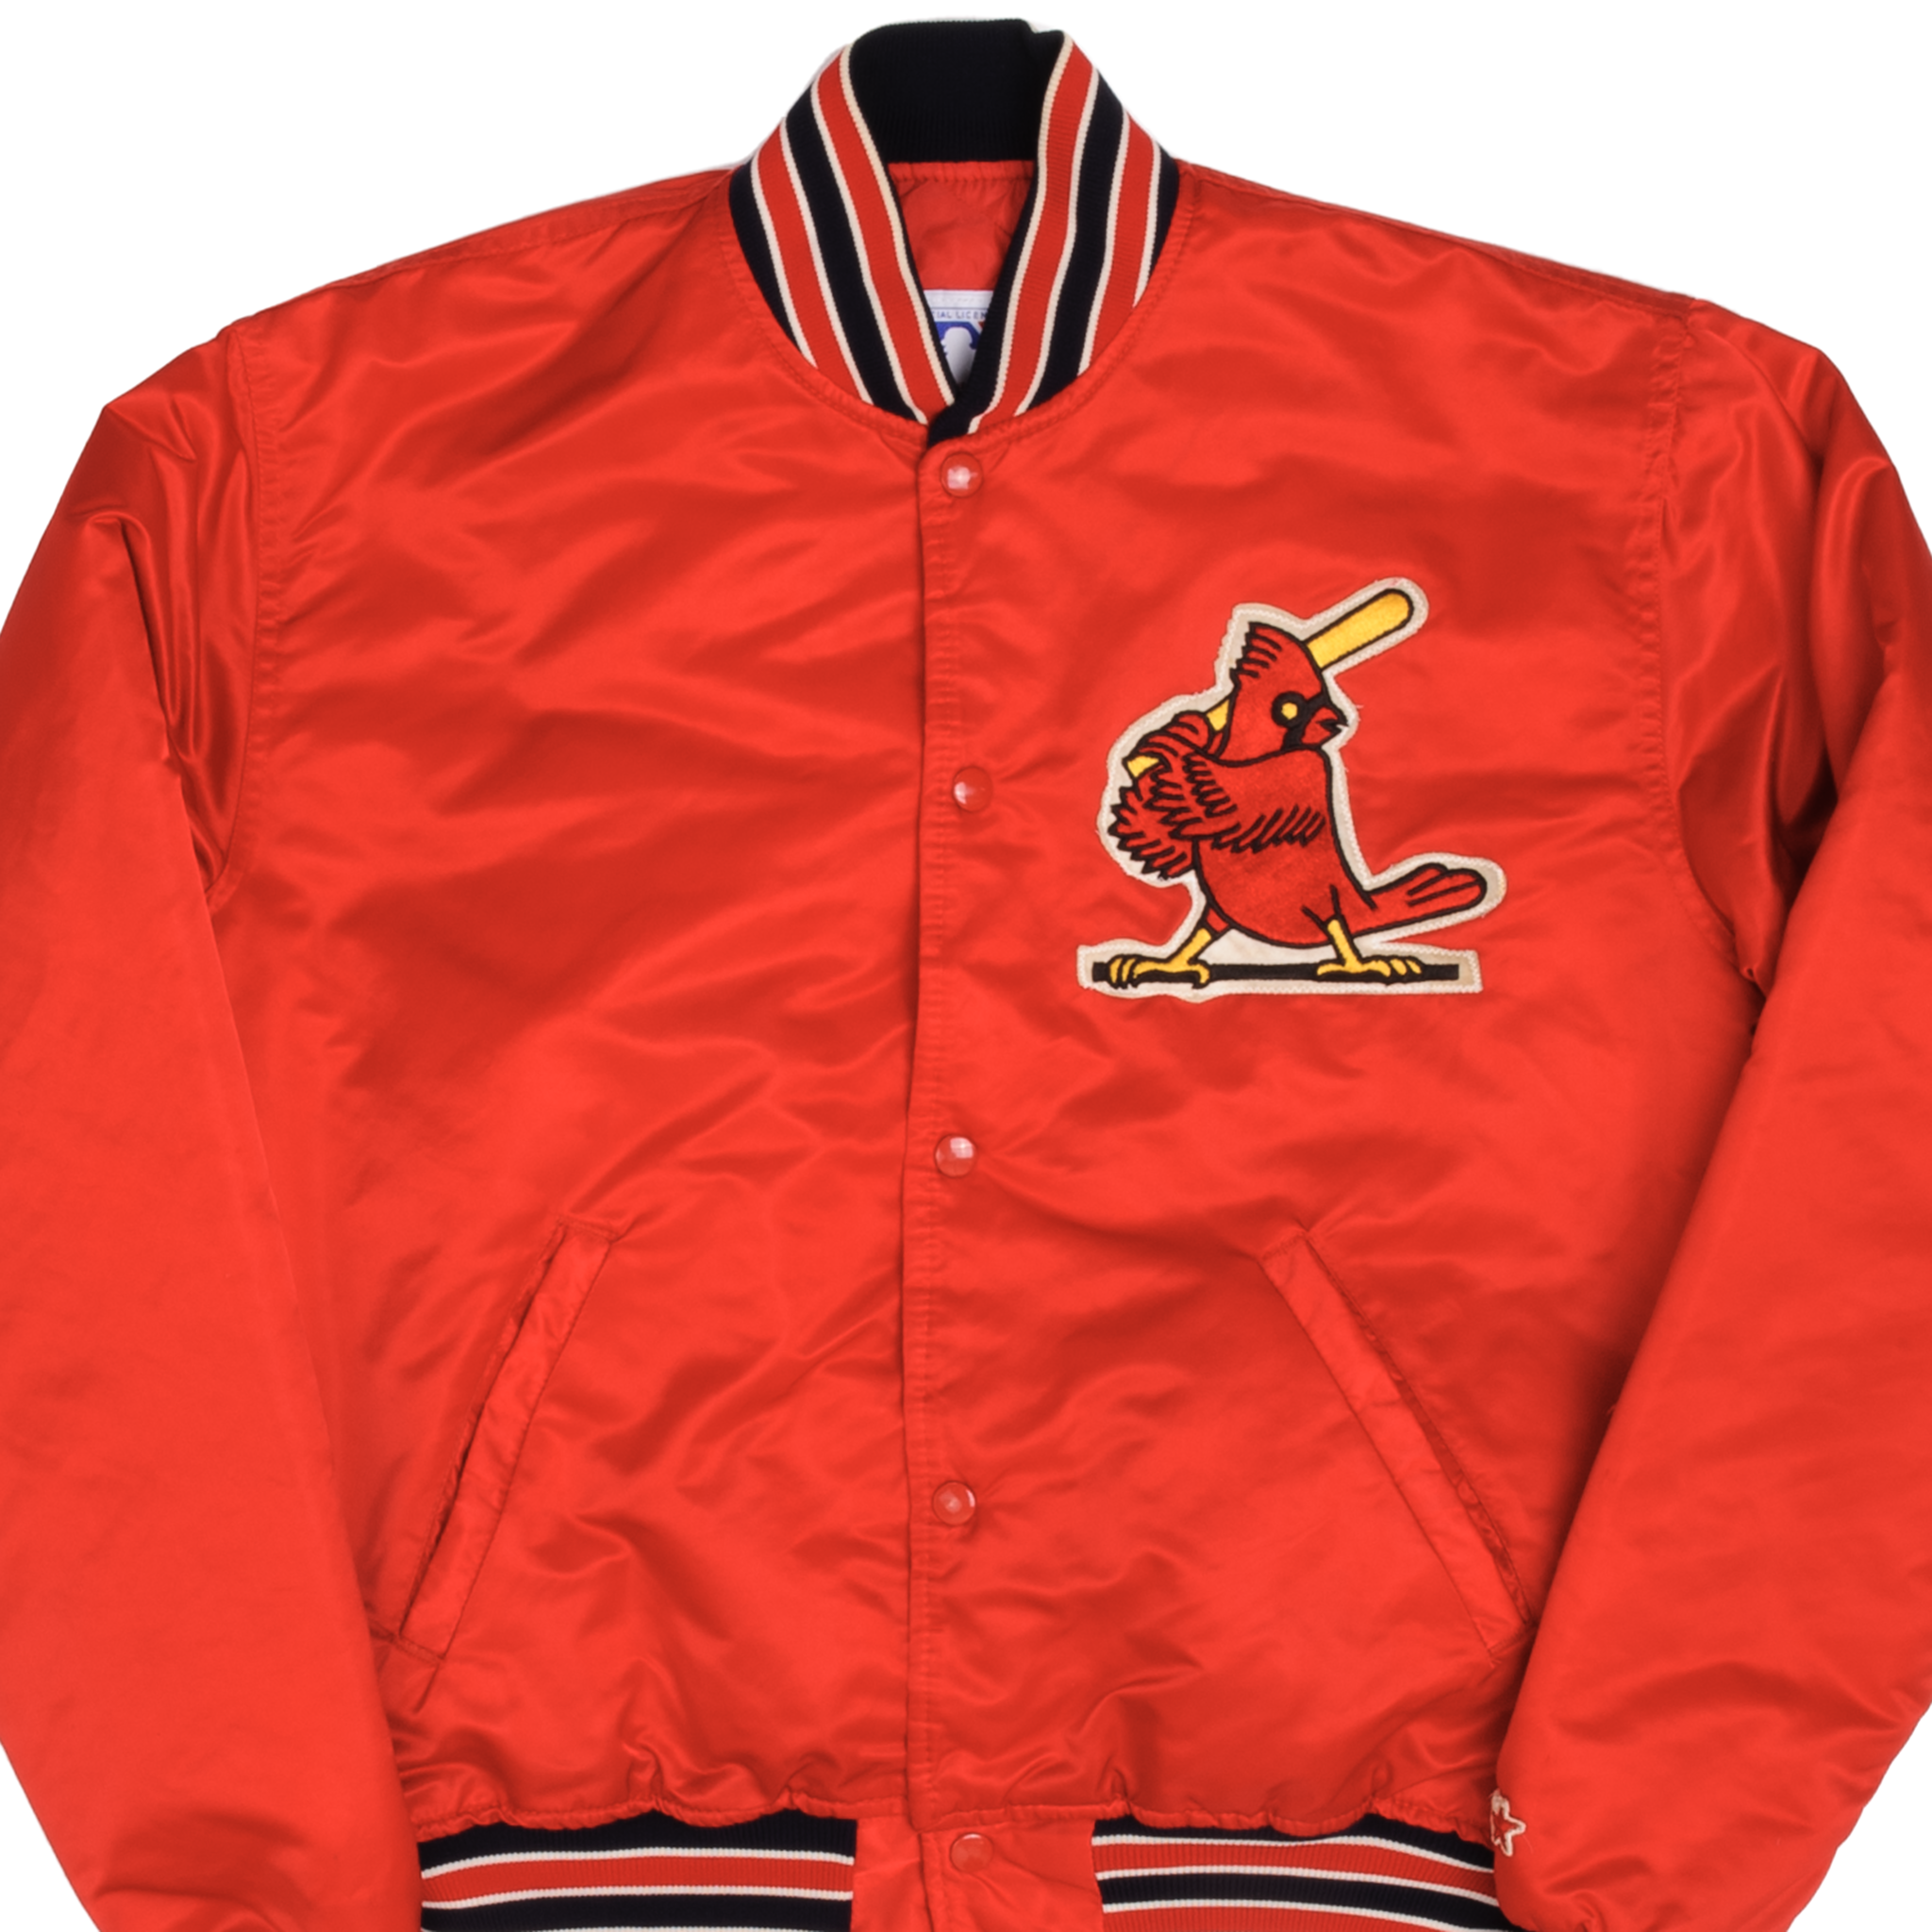 St. Louis Cardinals Archives - Maker of Jacket